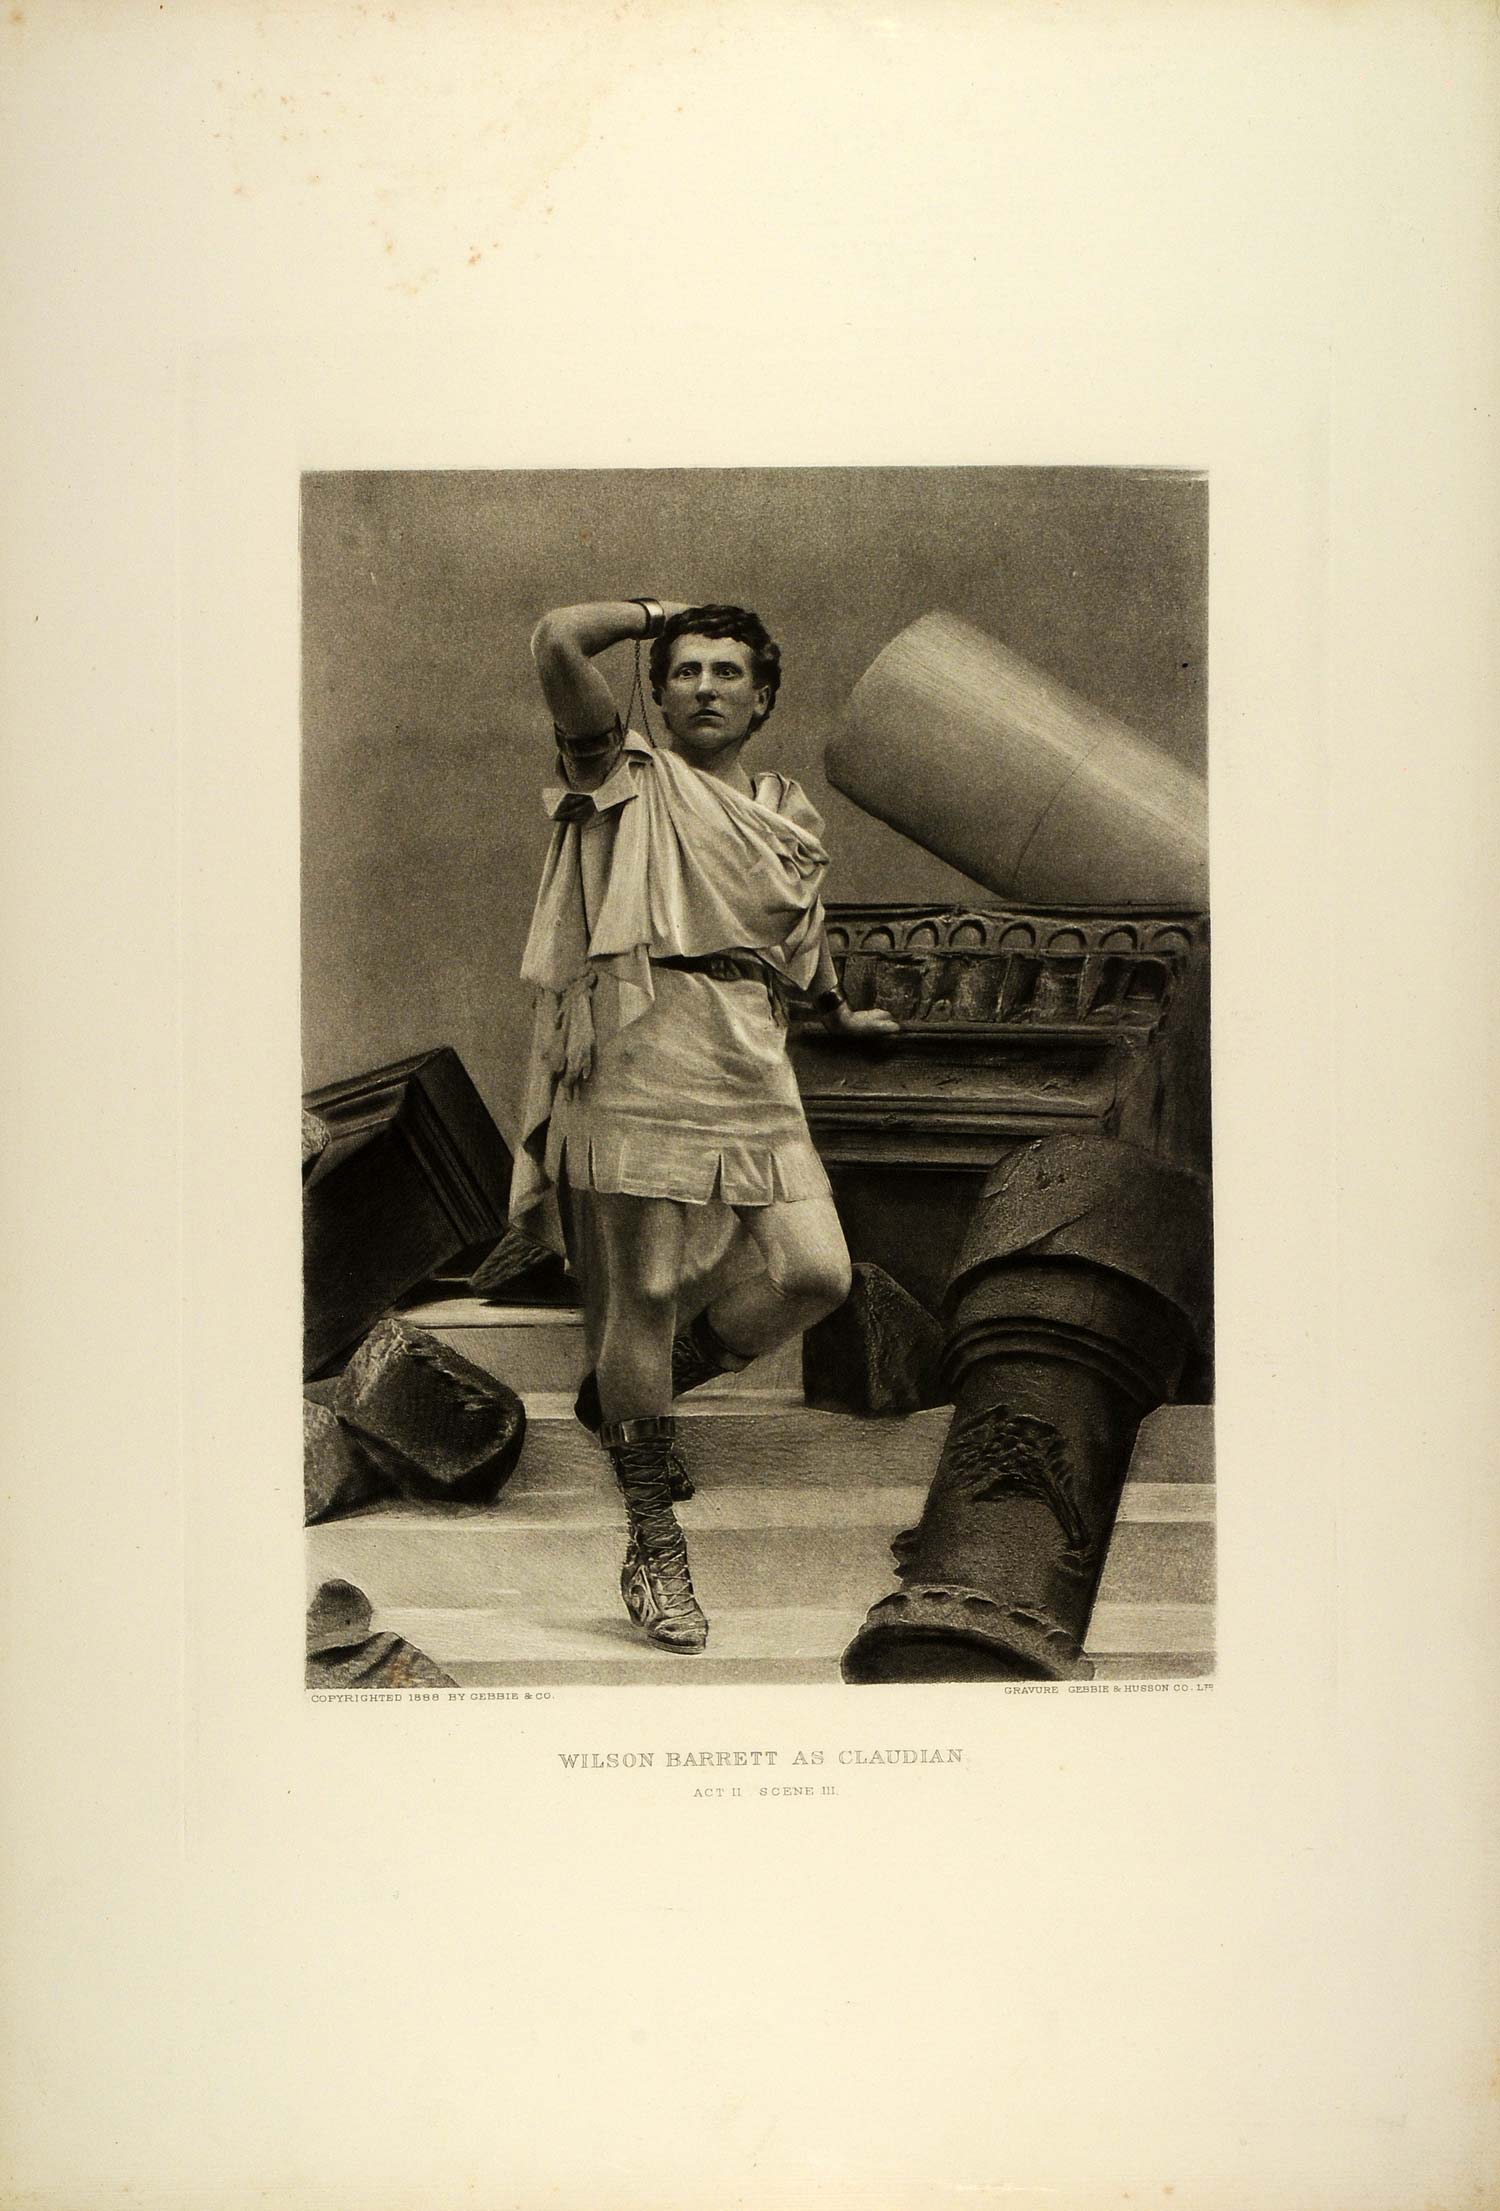 1887 Photogravure Wilson Barrett Stage Actor Claudian W. G. Wills Play SAS1